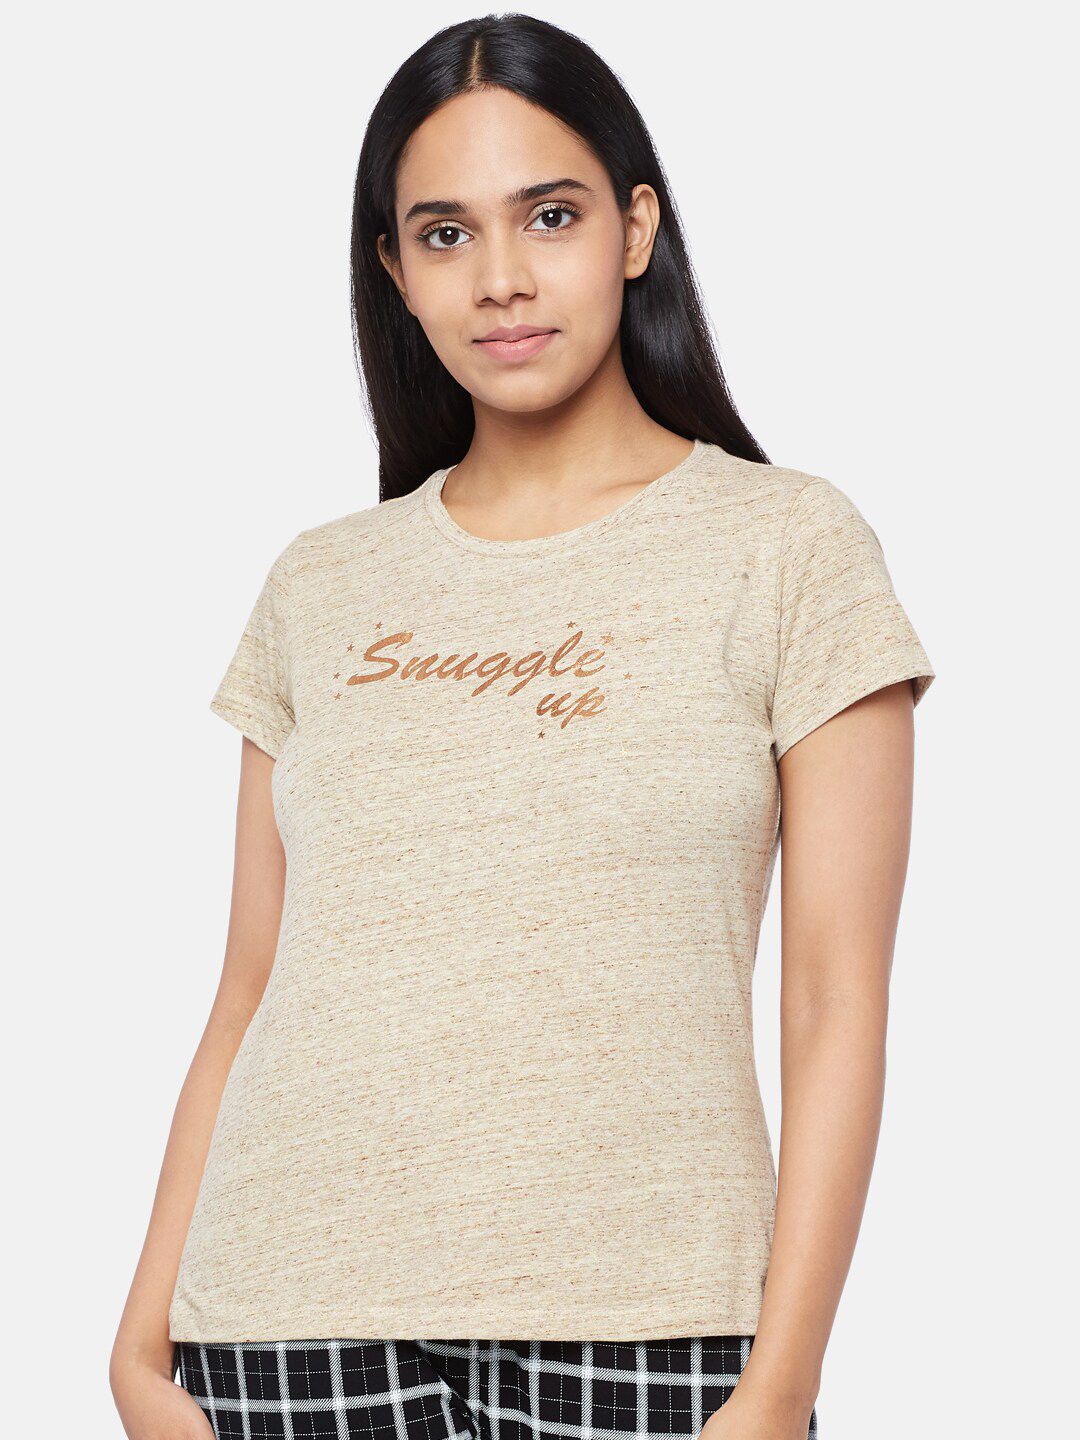 Dreamz by Pantaloons Women Brown Printed Regular Lounge tshirt Price in India